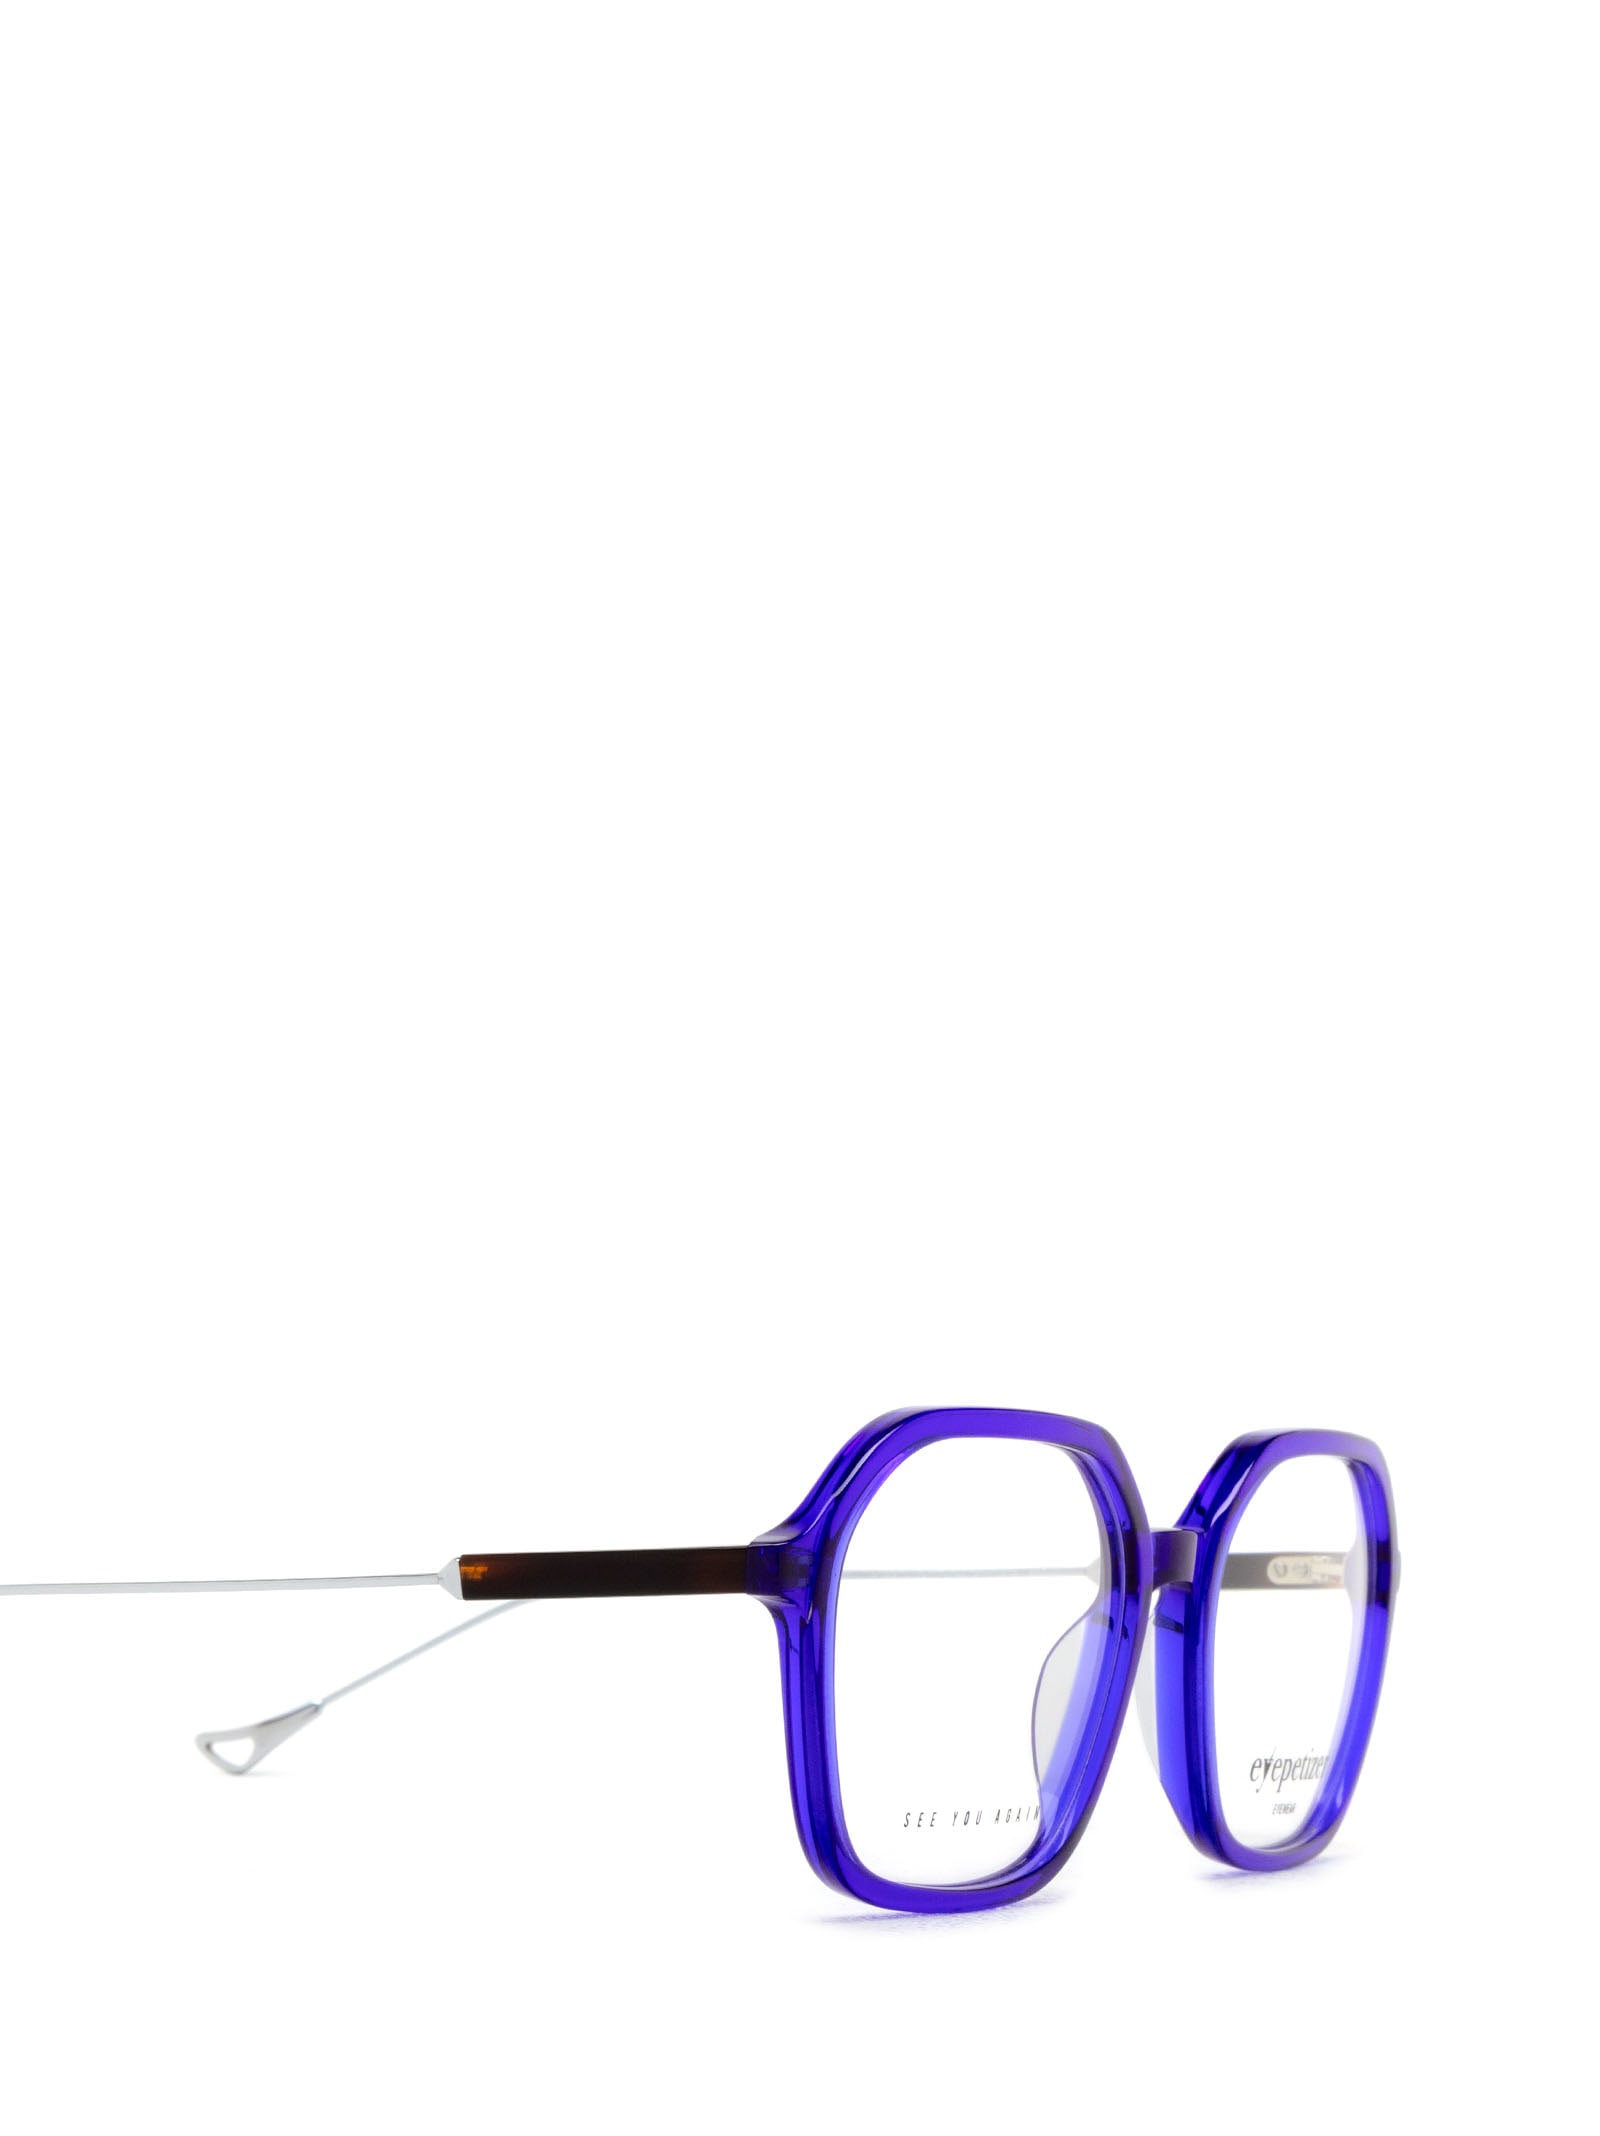 Shop Eyepetizer Aida Opt Blue Glasses